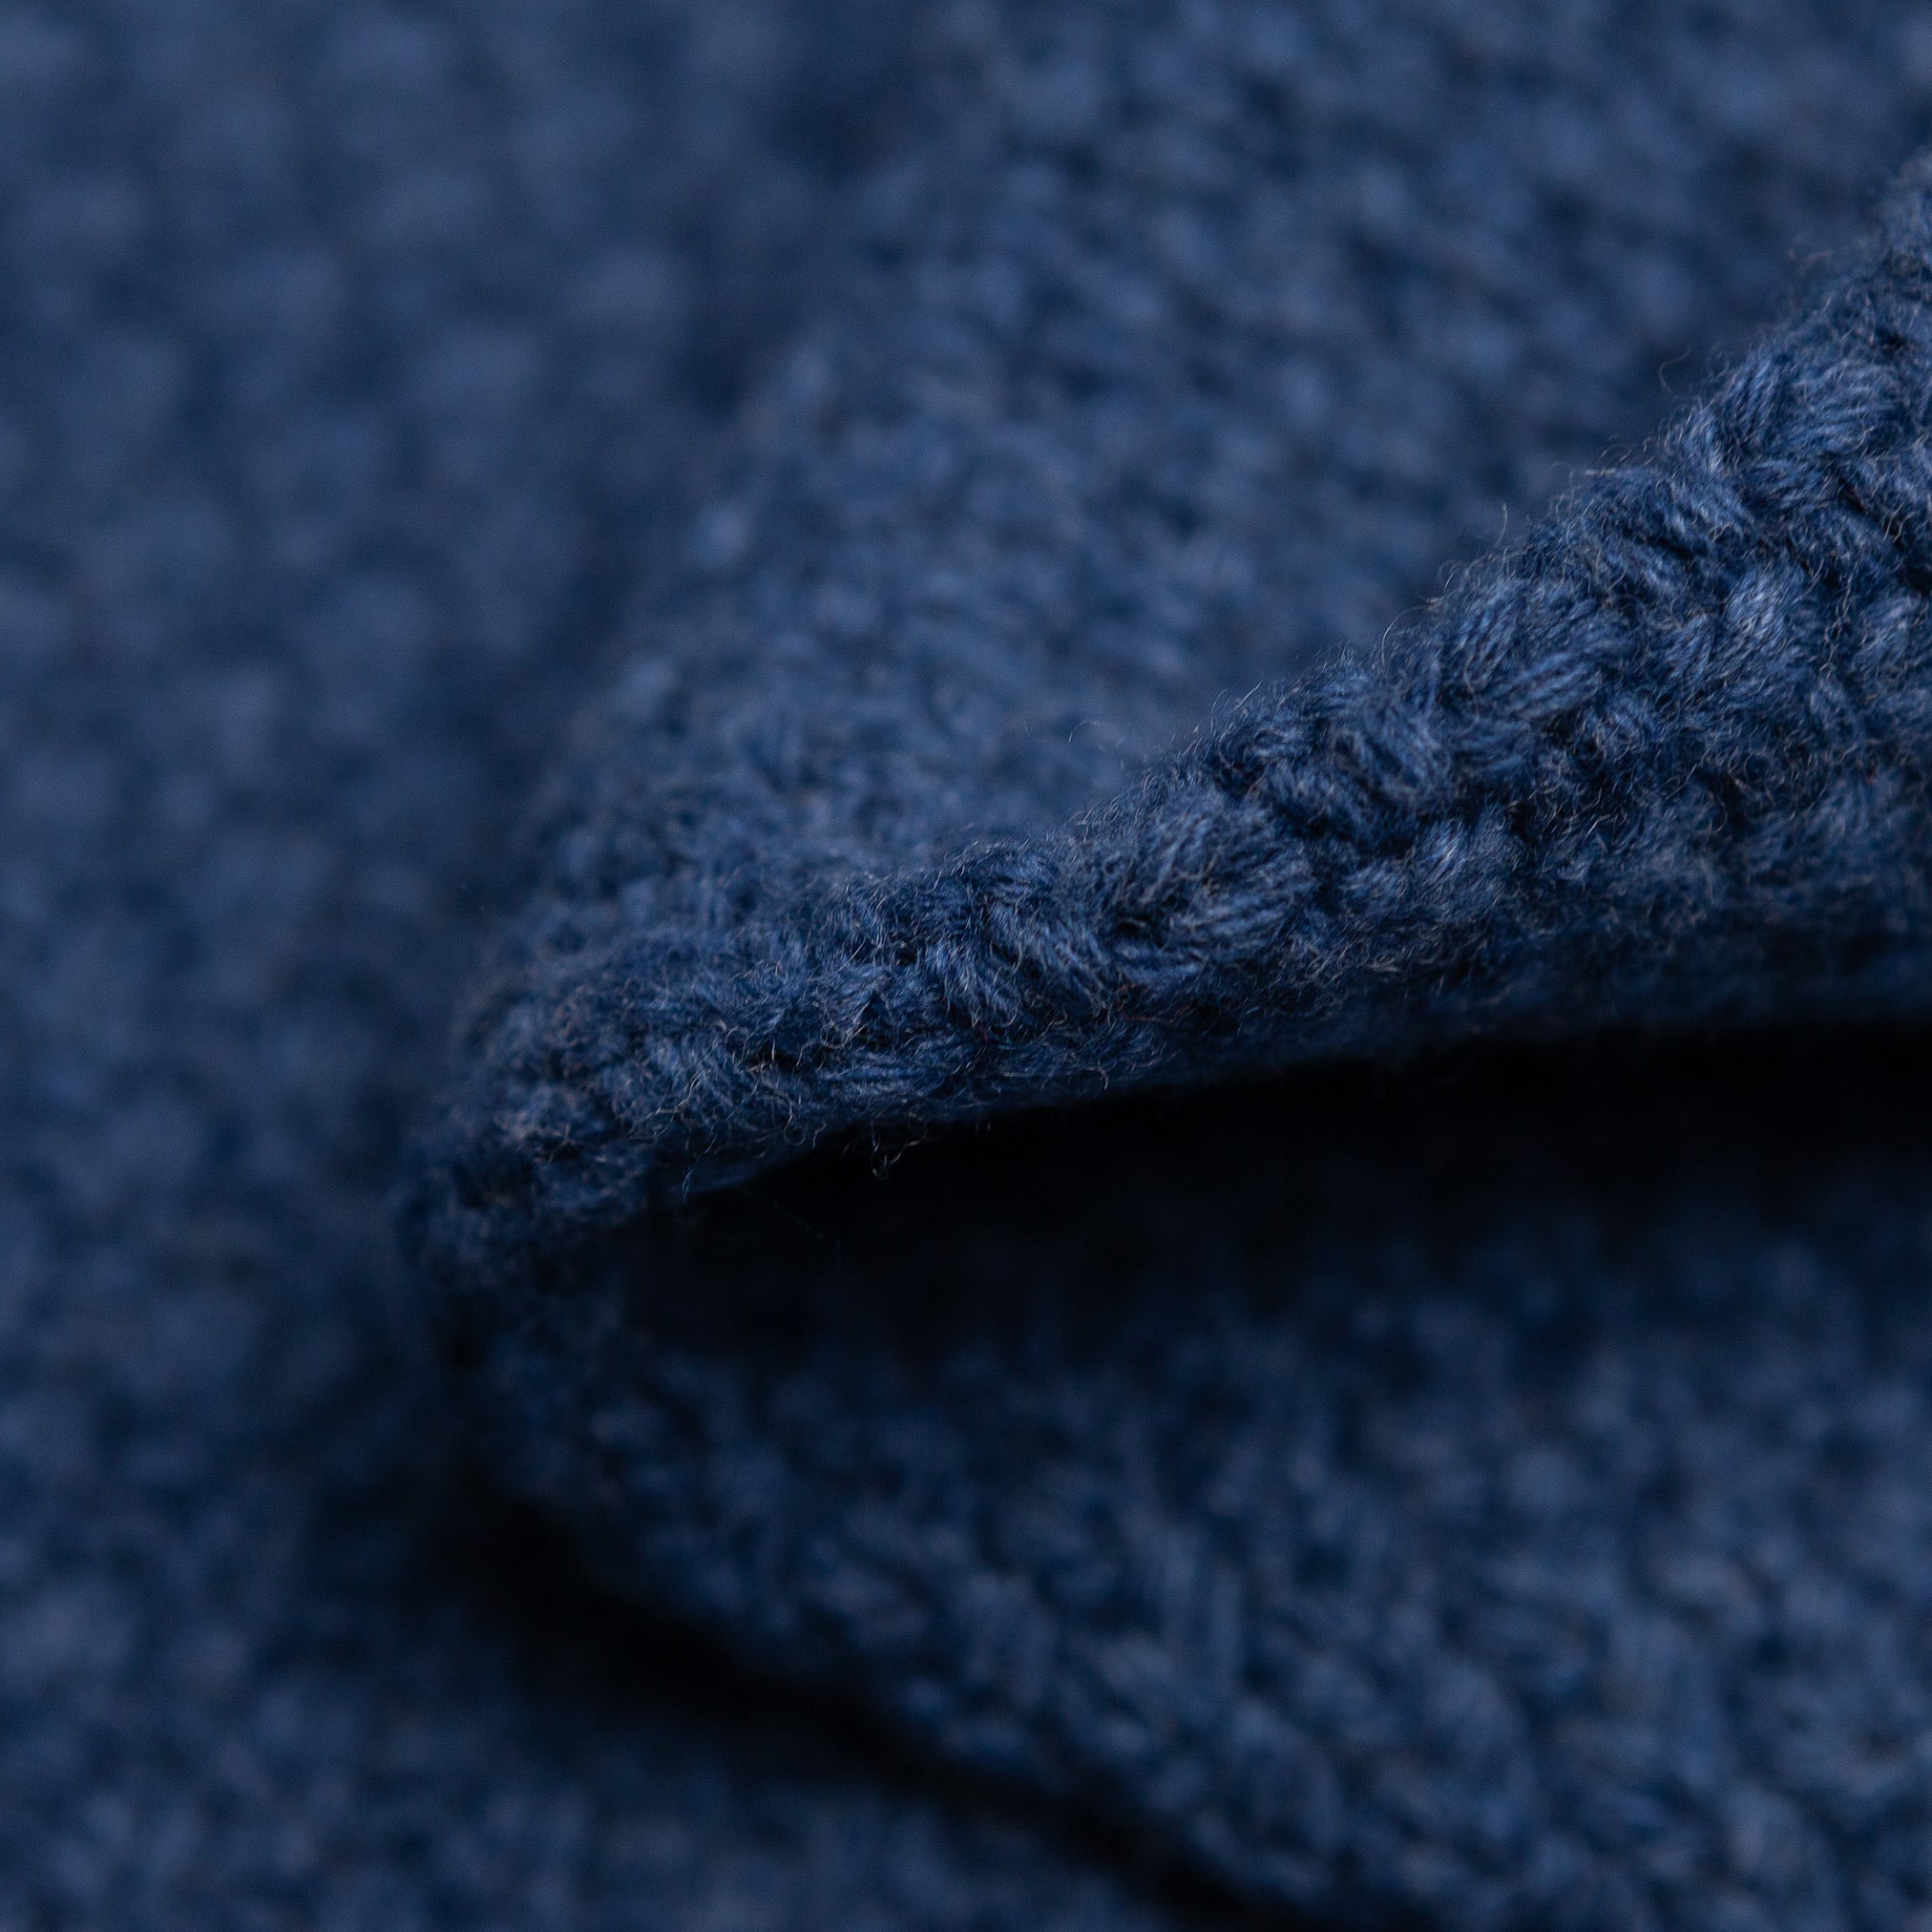 Dolcevita Sweater in Light Blue